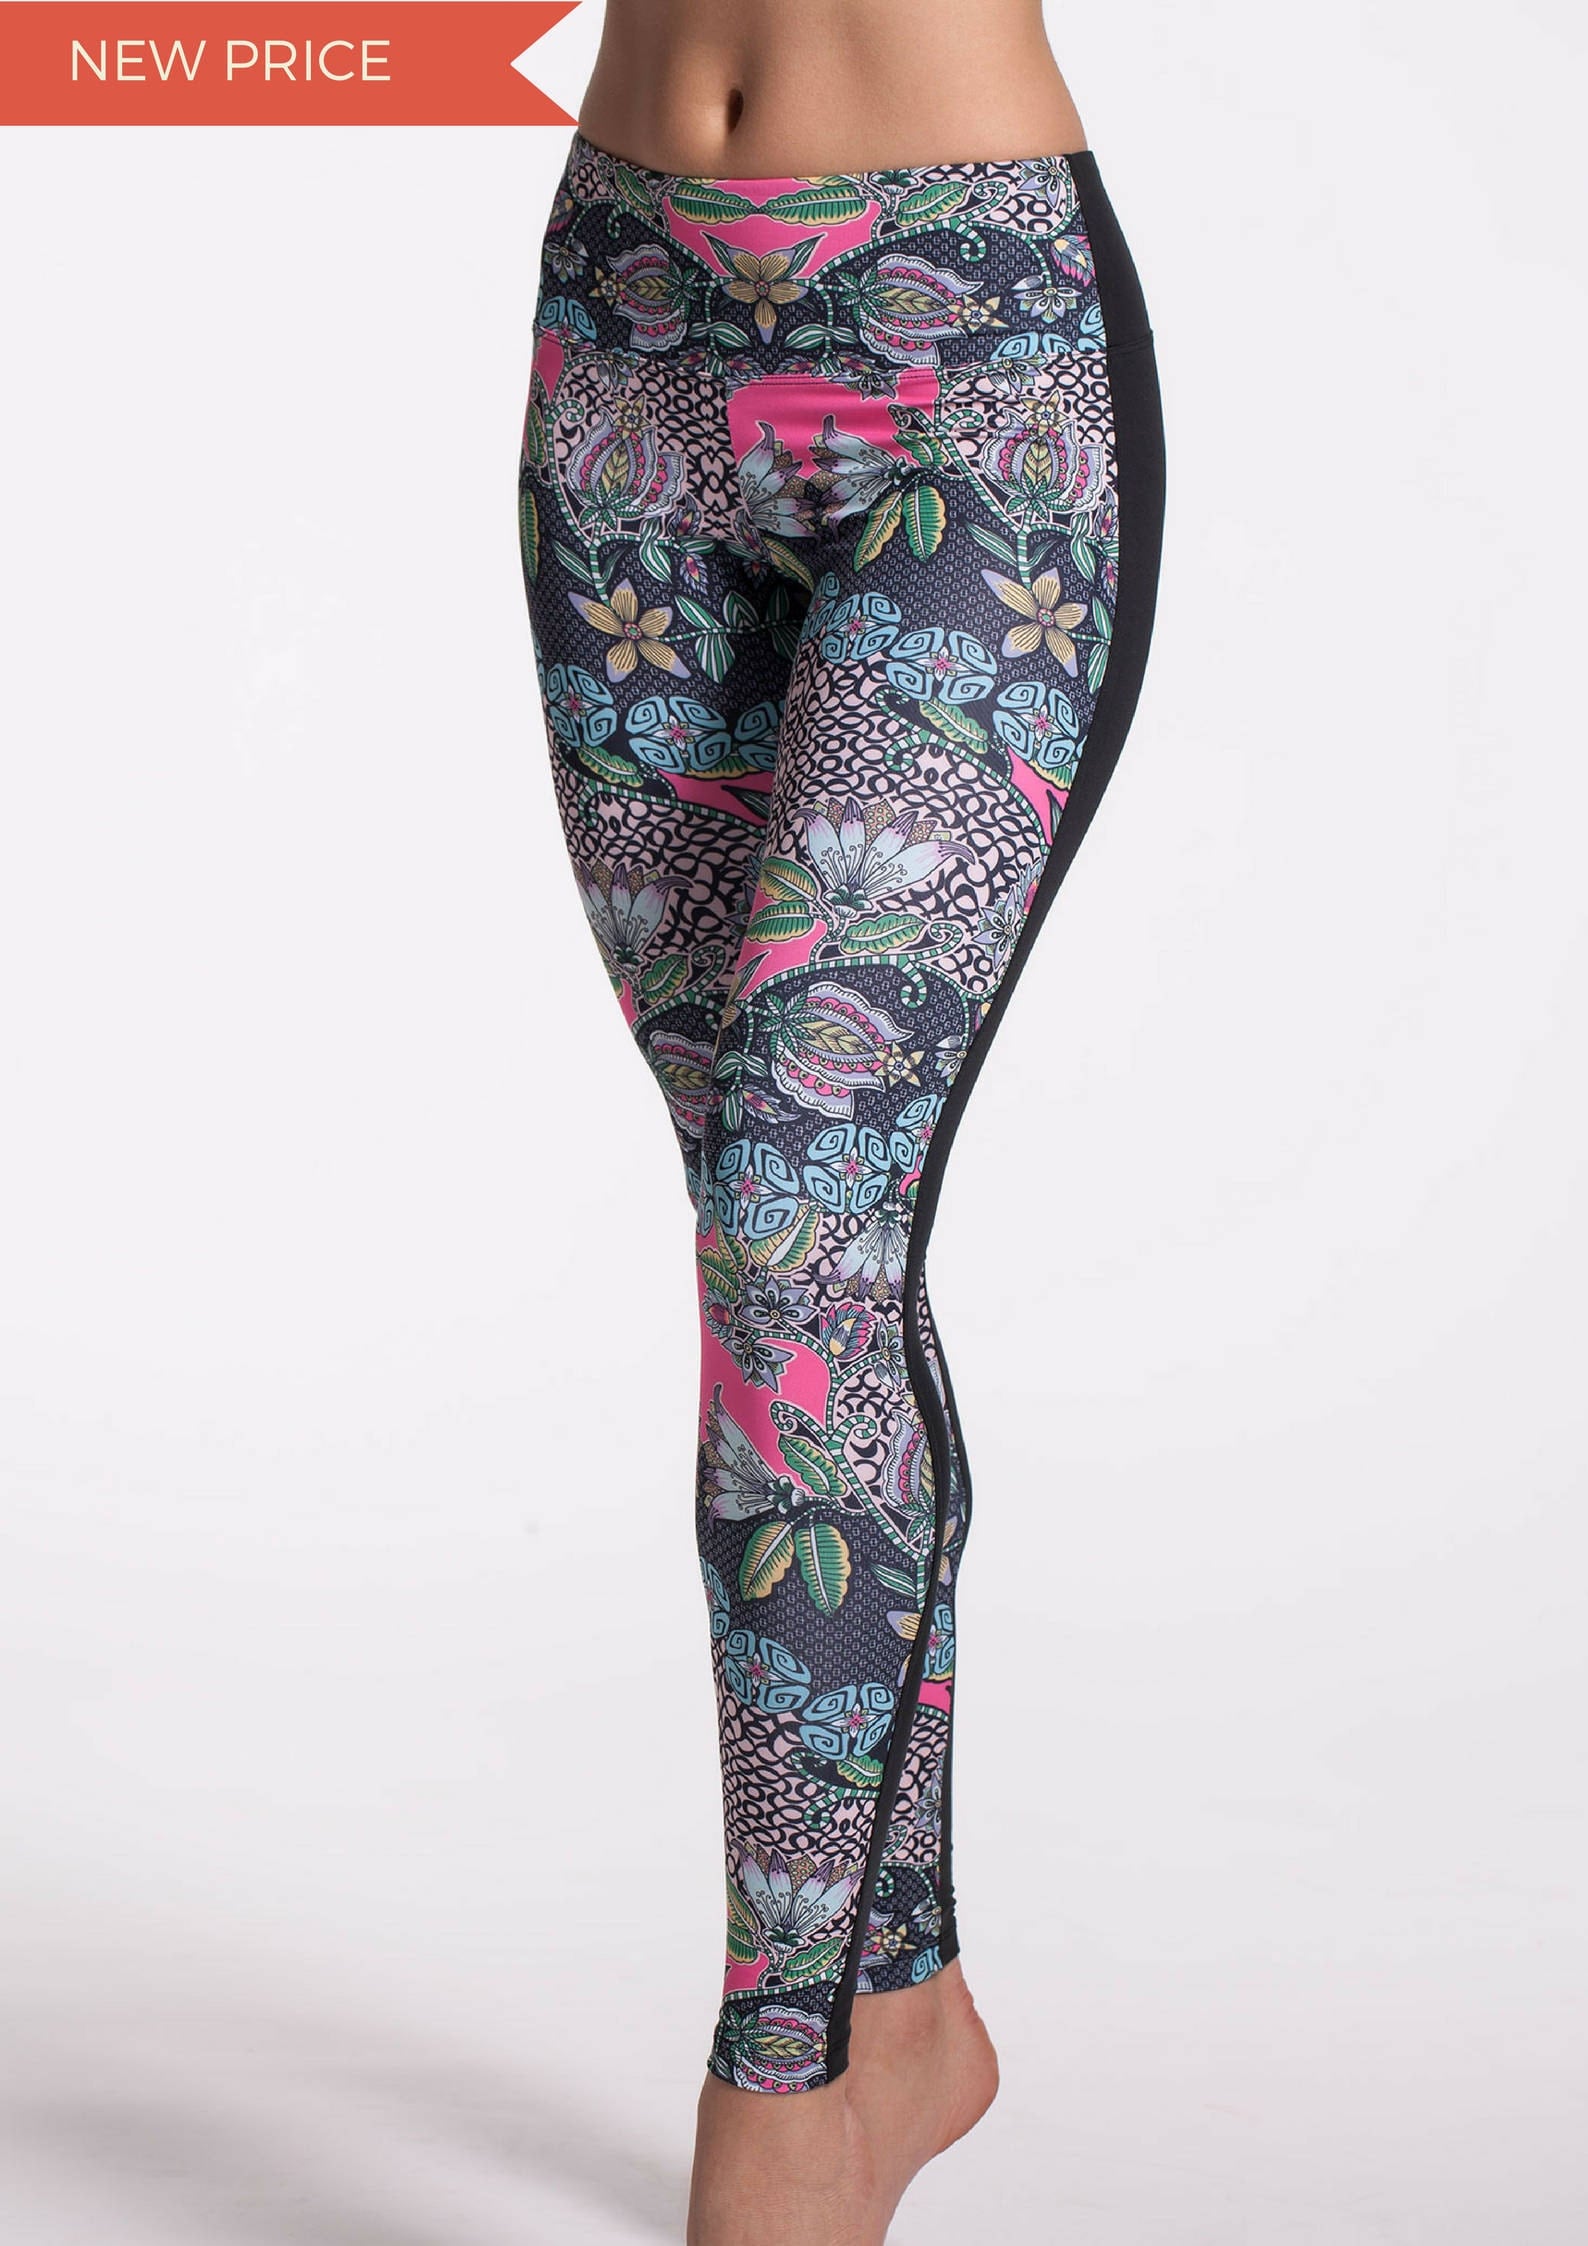 Colorful Yoga Pants-Yoga Leggings-Flower Print Tights-Workout